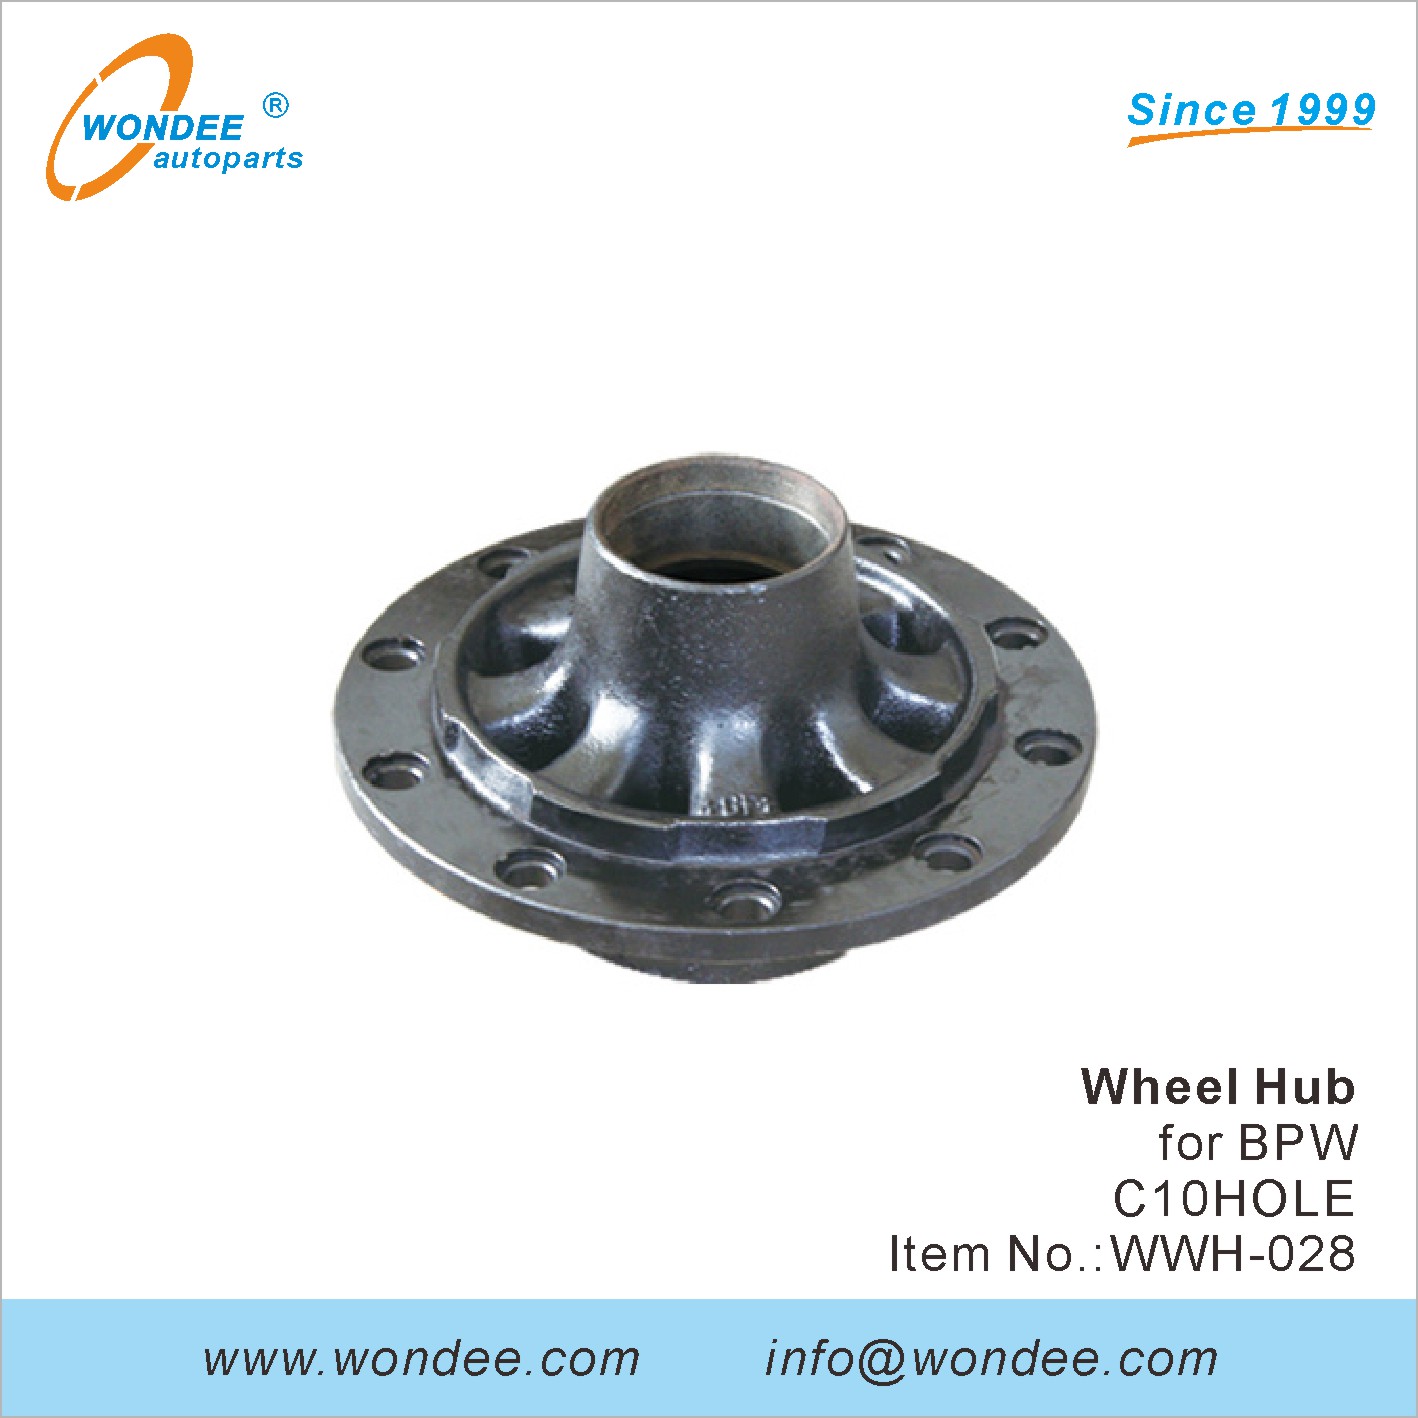 WONDEE wheel hub (28)